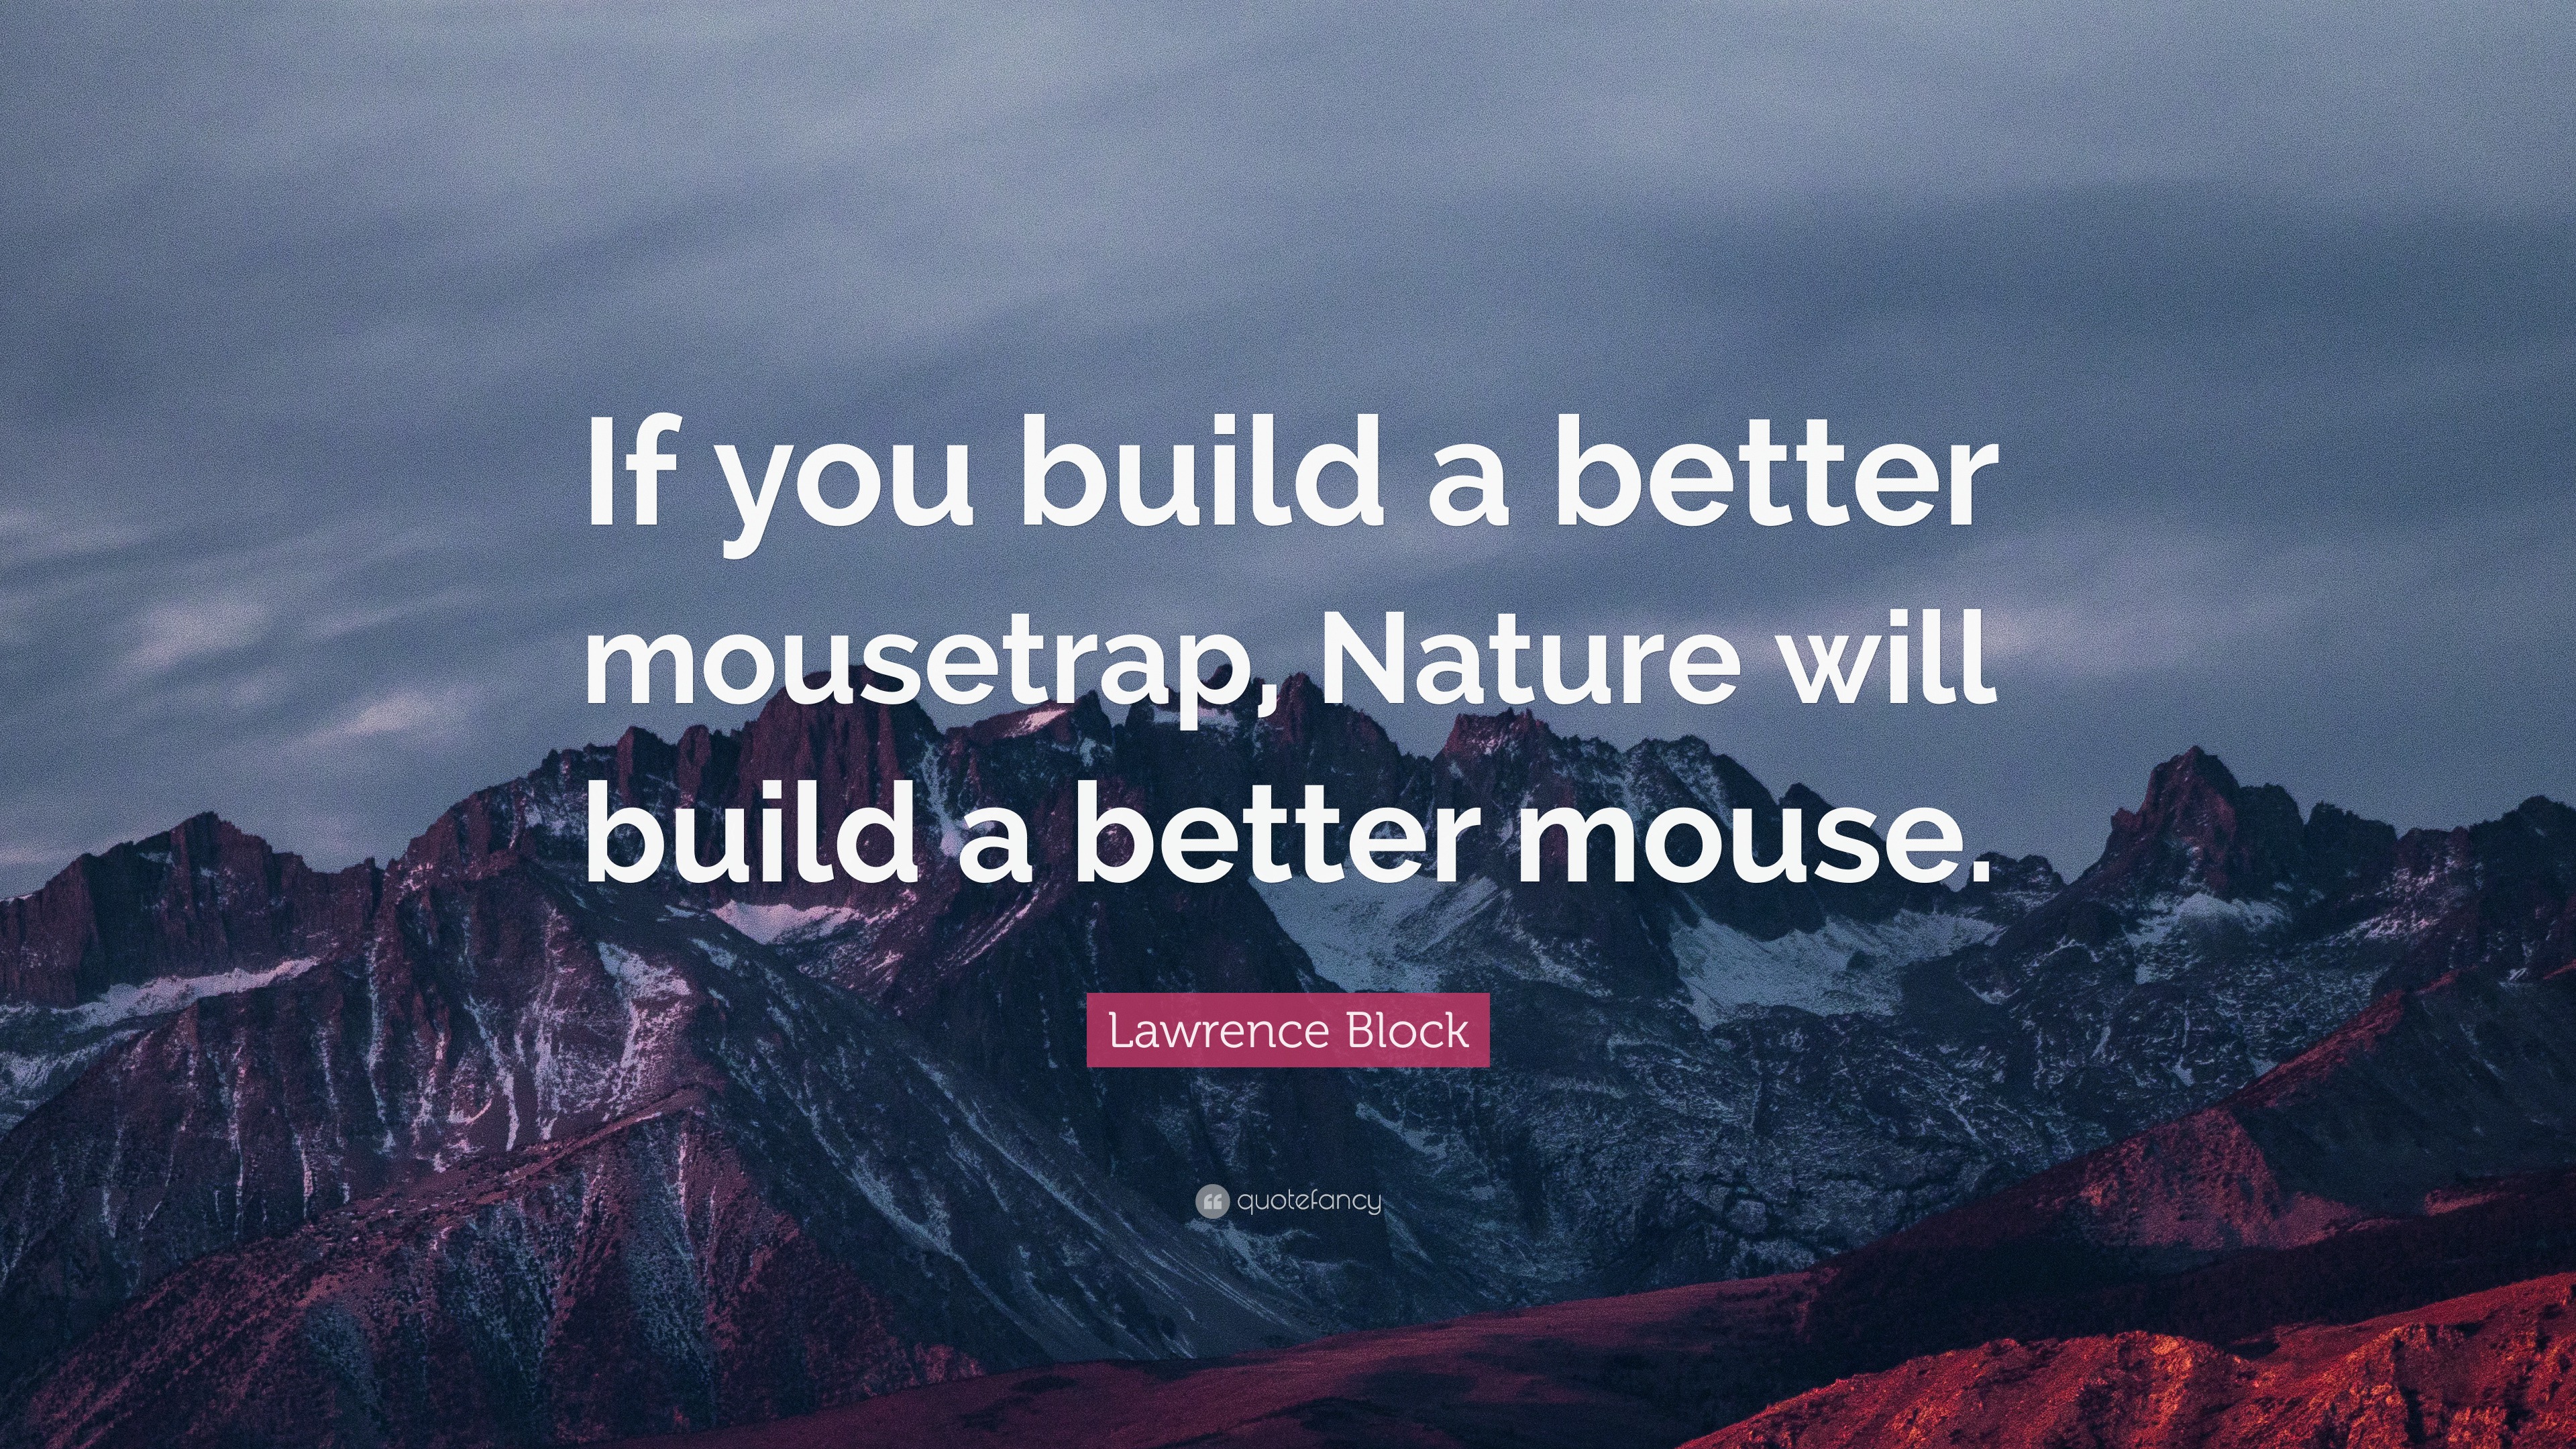 You Cannot Build a Better Mousetrap